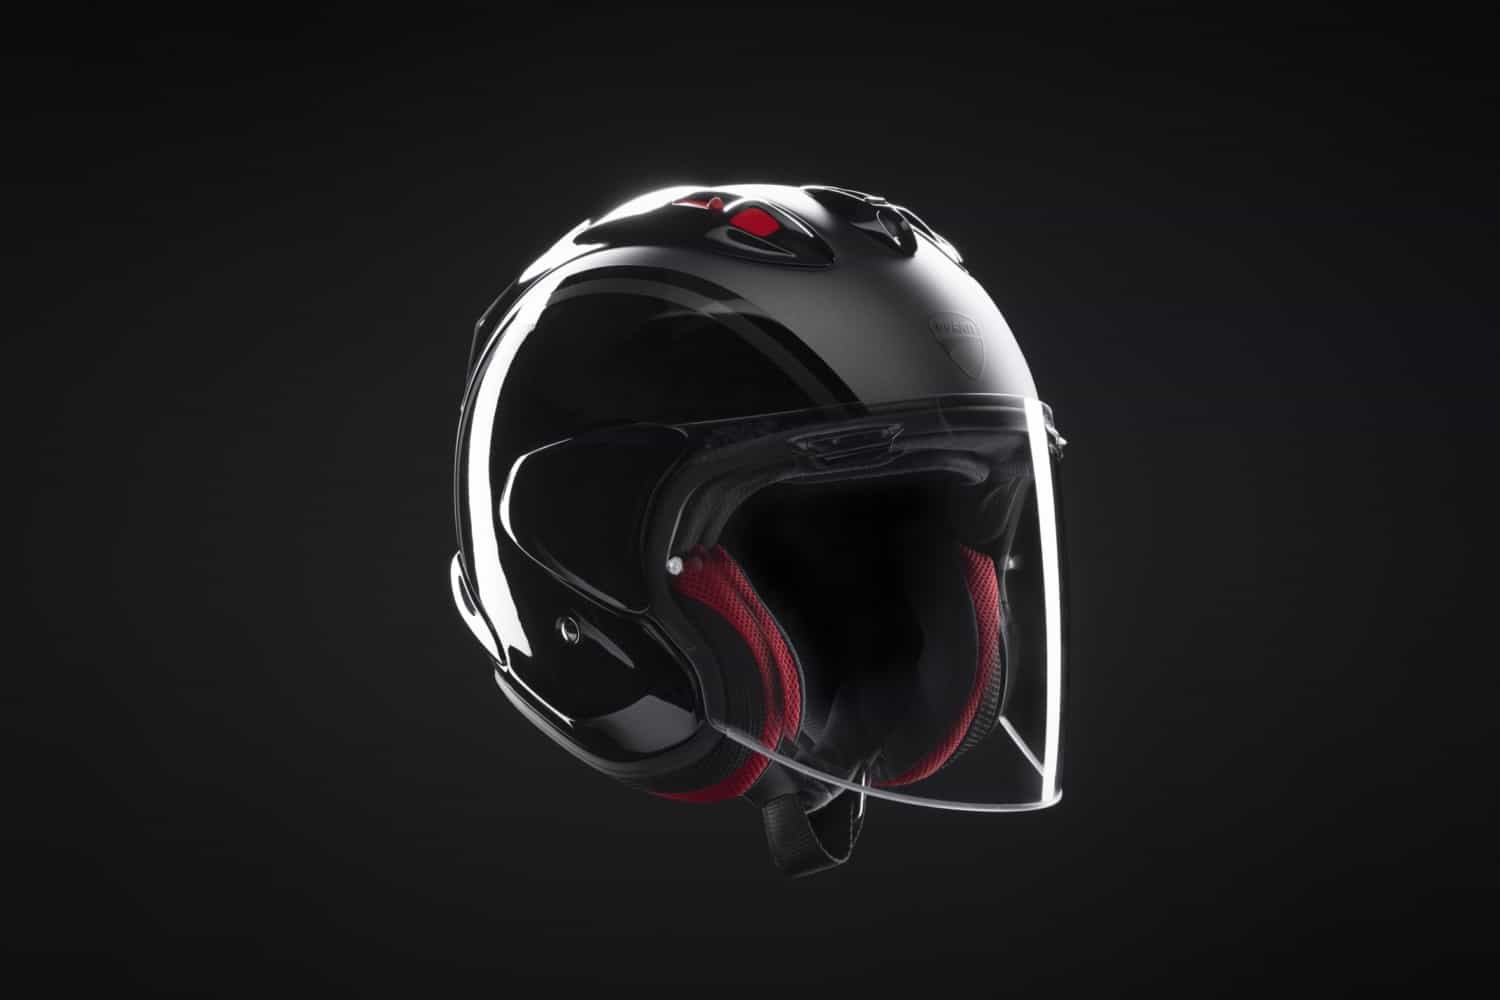 Ducati XDiavel Nera med håndsyet lædersæde afsløret i dag